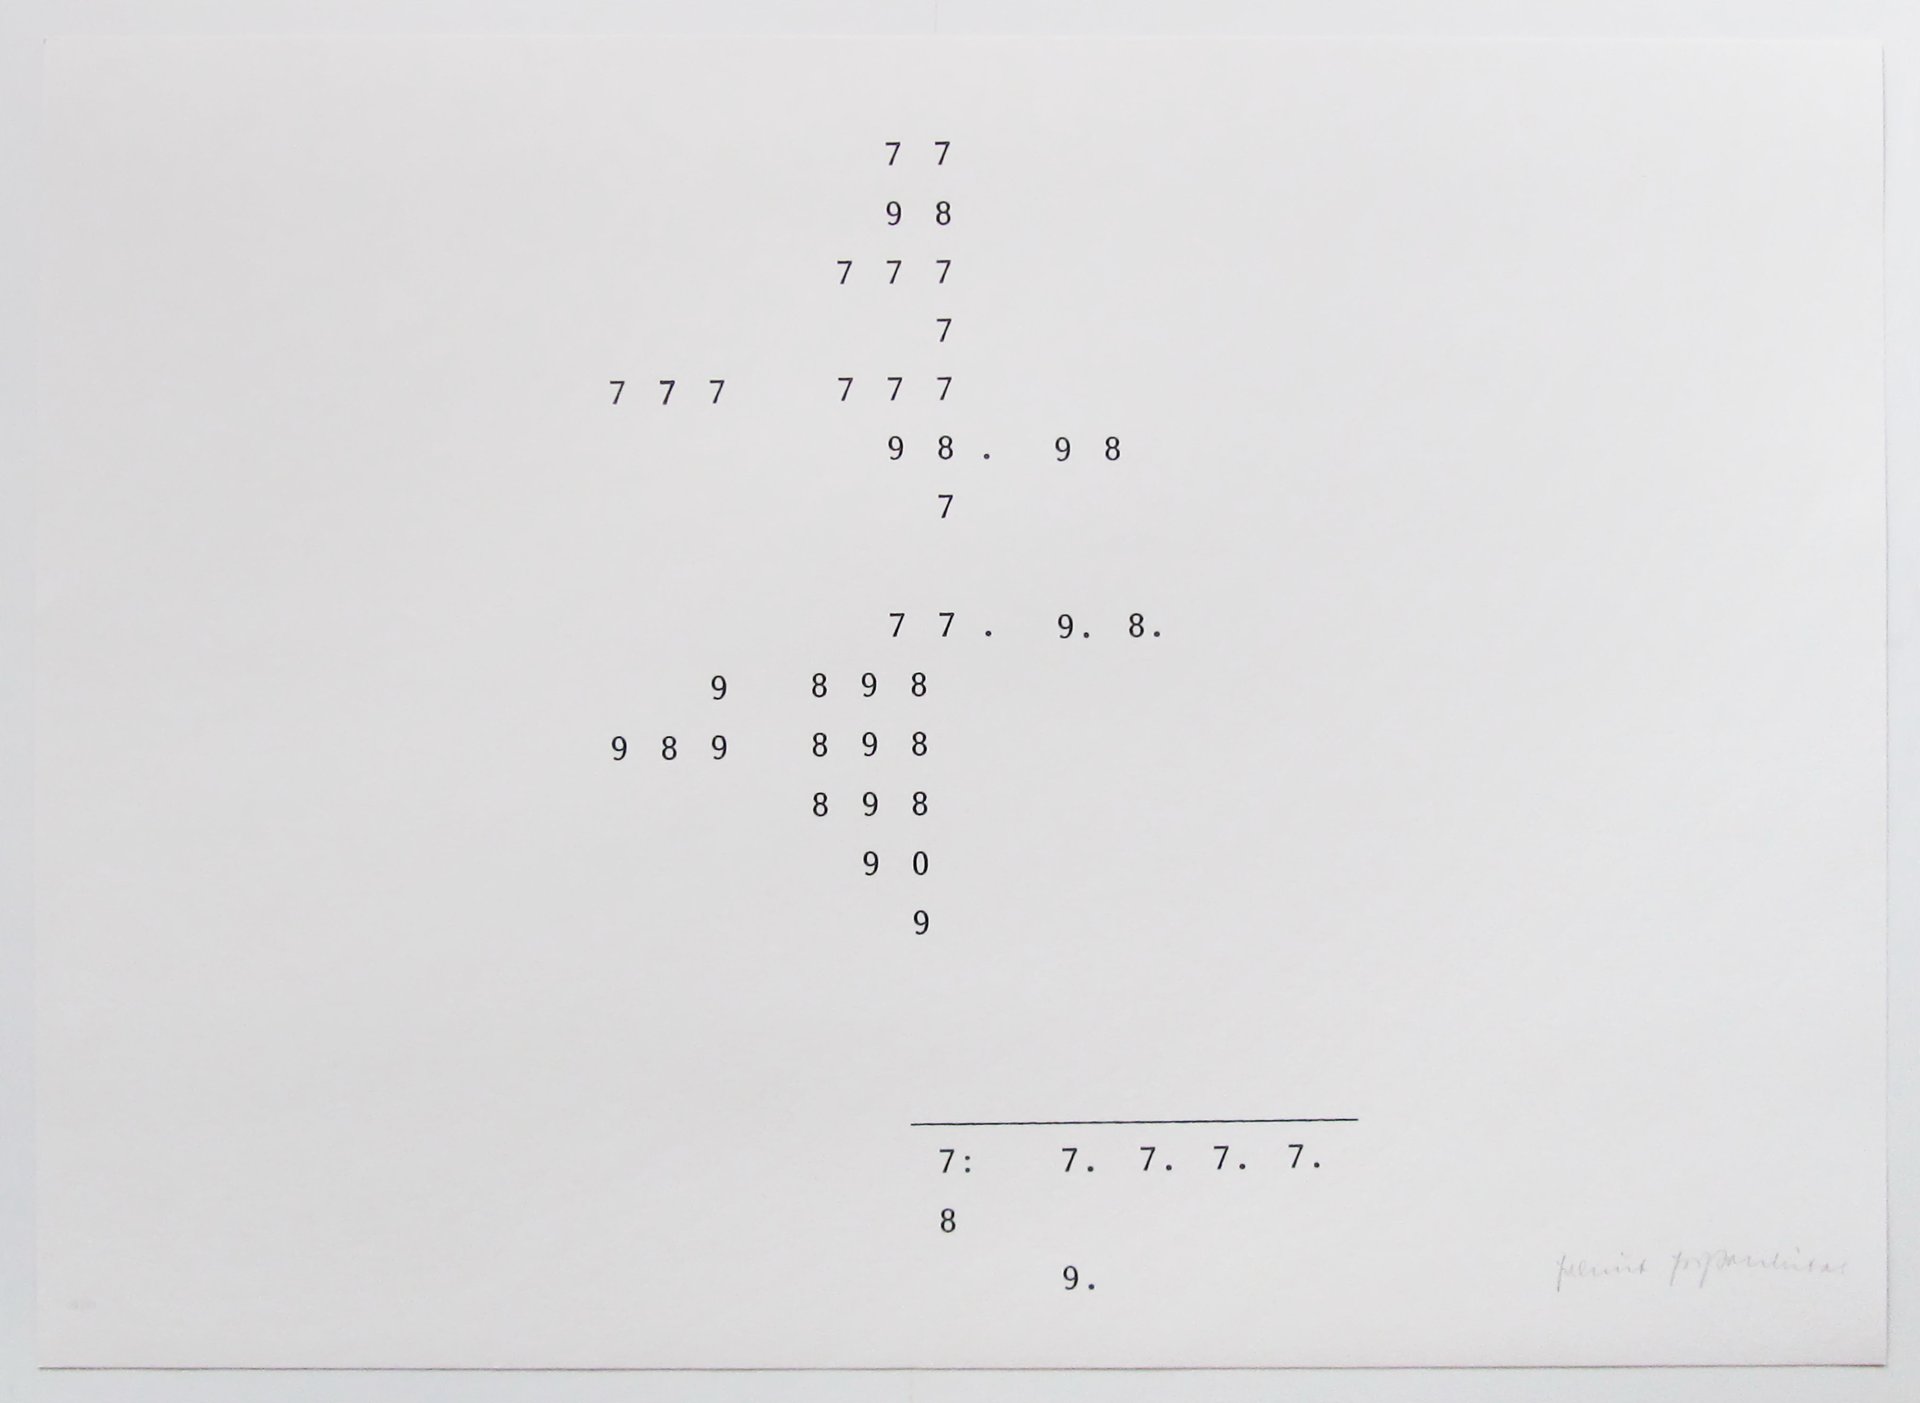 helmut heissenbüttel, konkrete poesie 0 (1986), silkscreen on laid paper, 80,5 x 107 cm